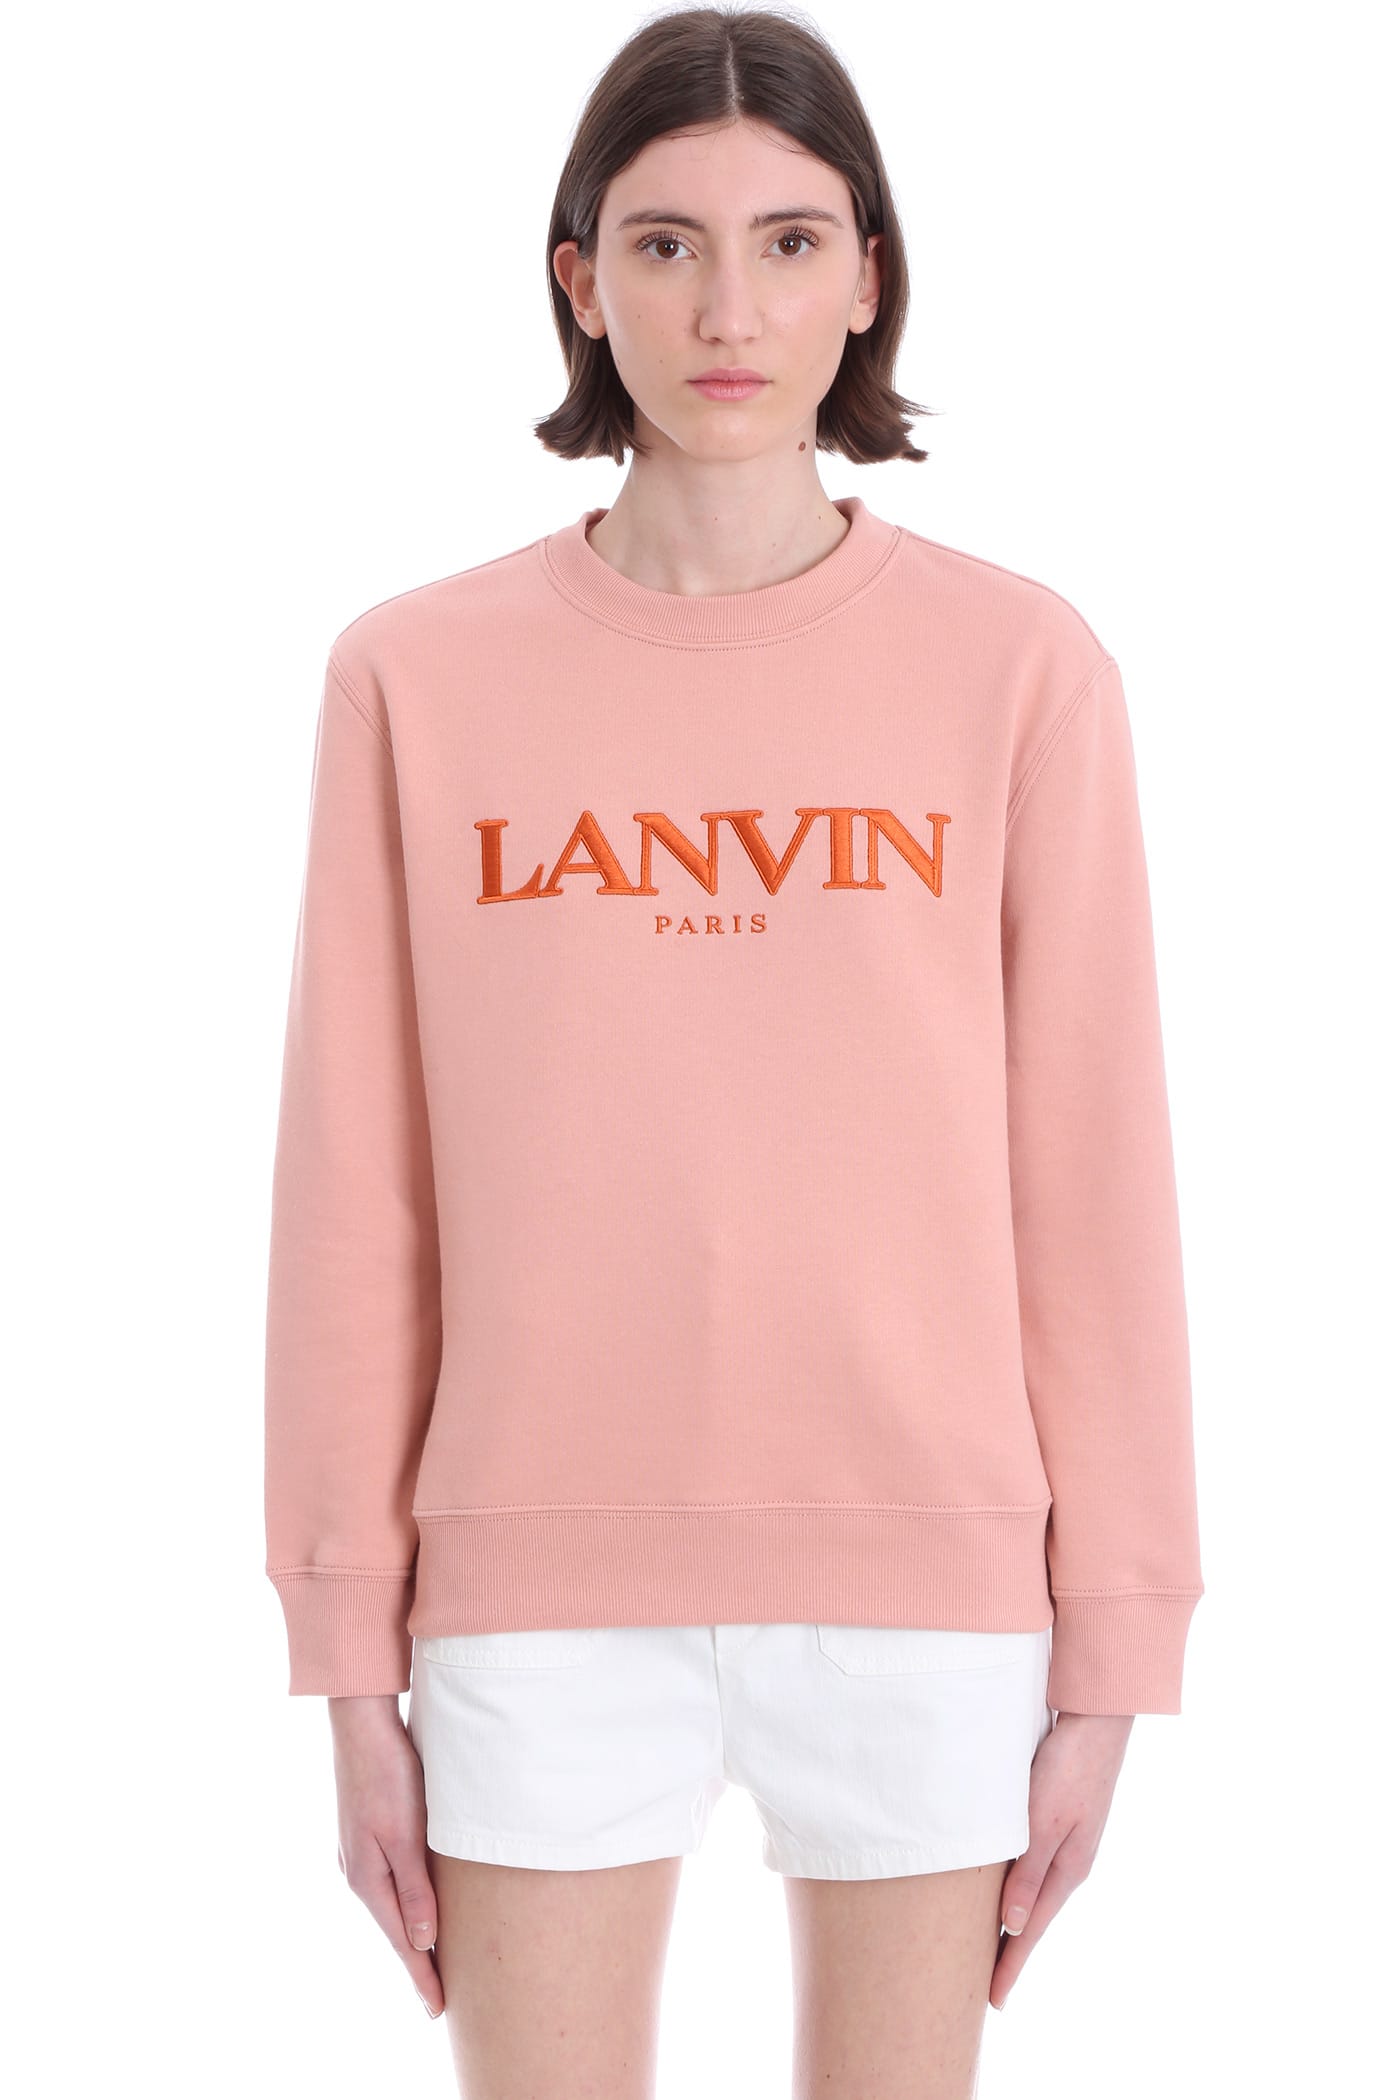 Lanvin Sweatshirt In Rose-pink Cotton